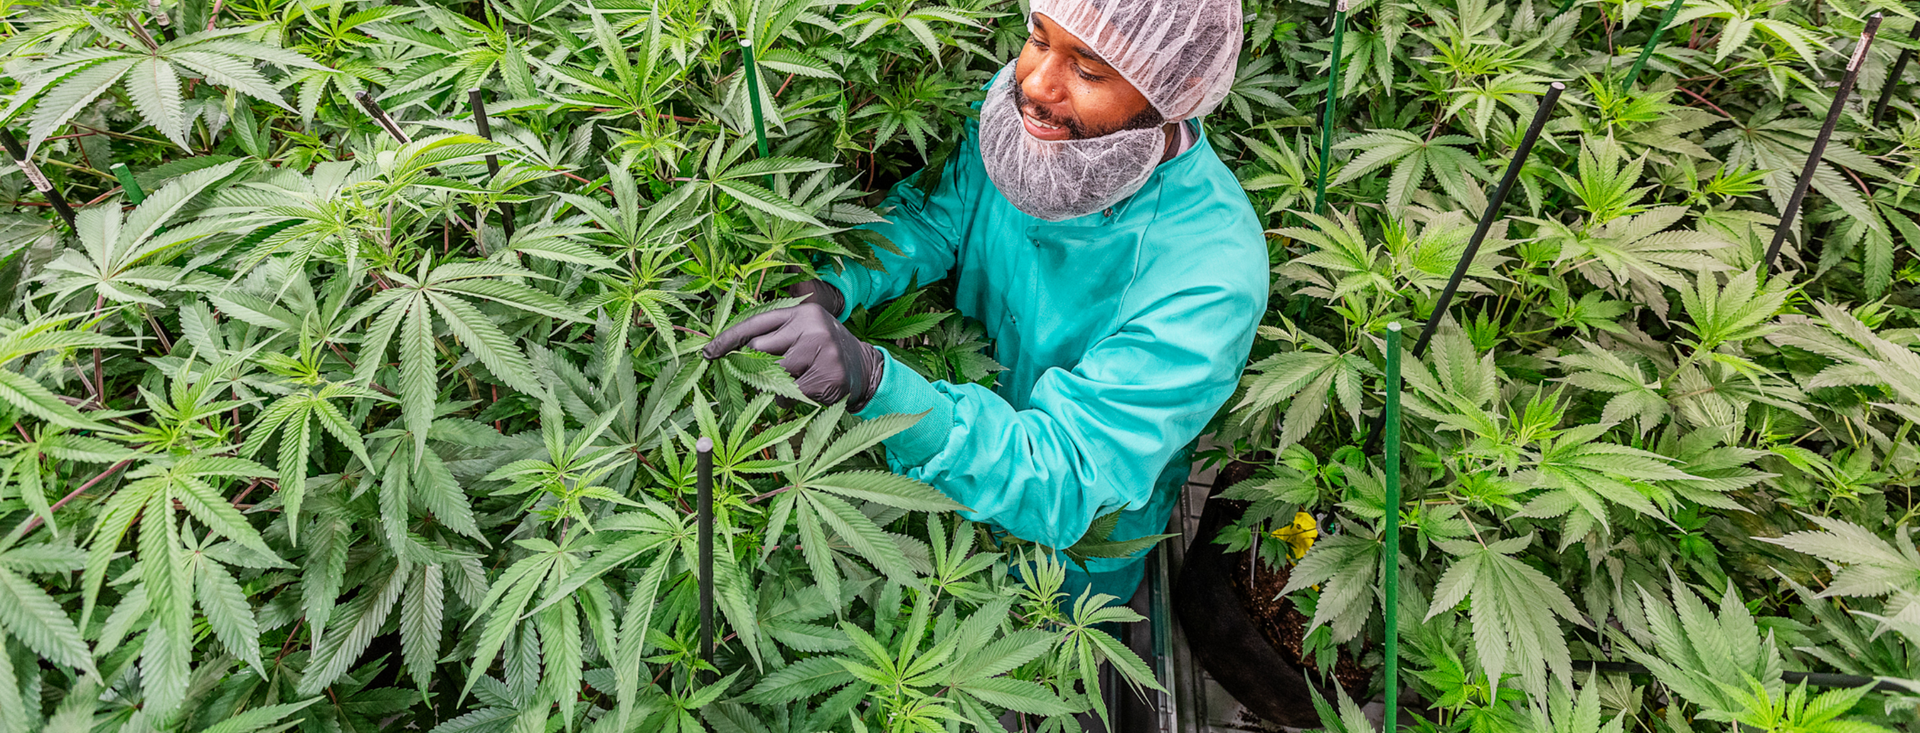 man in cannabis field at a Curaleaf marijuana grow facility.